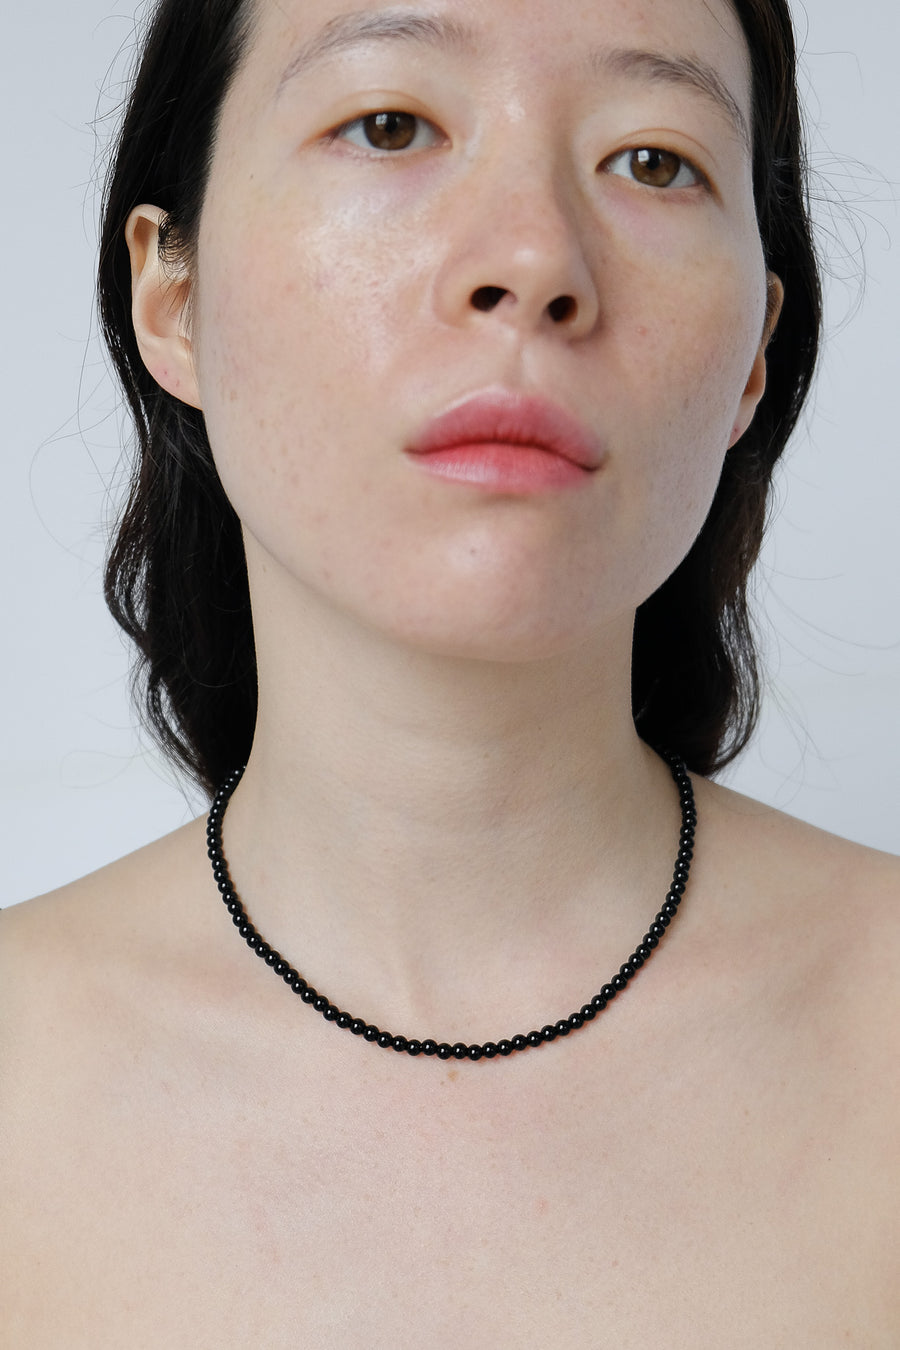 Black onyx necklace